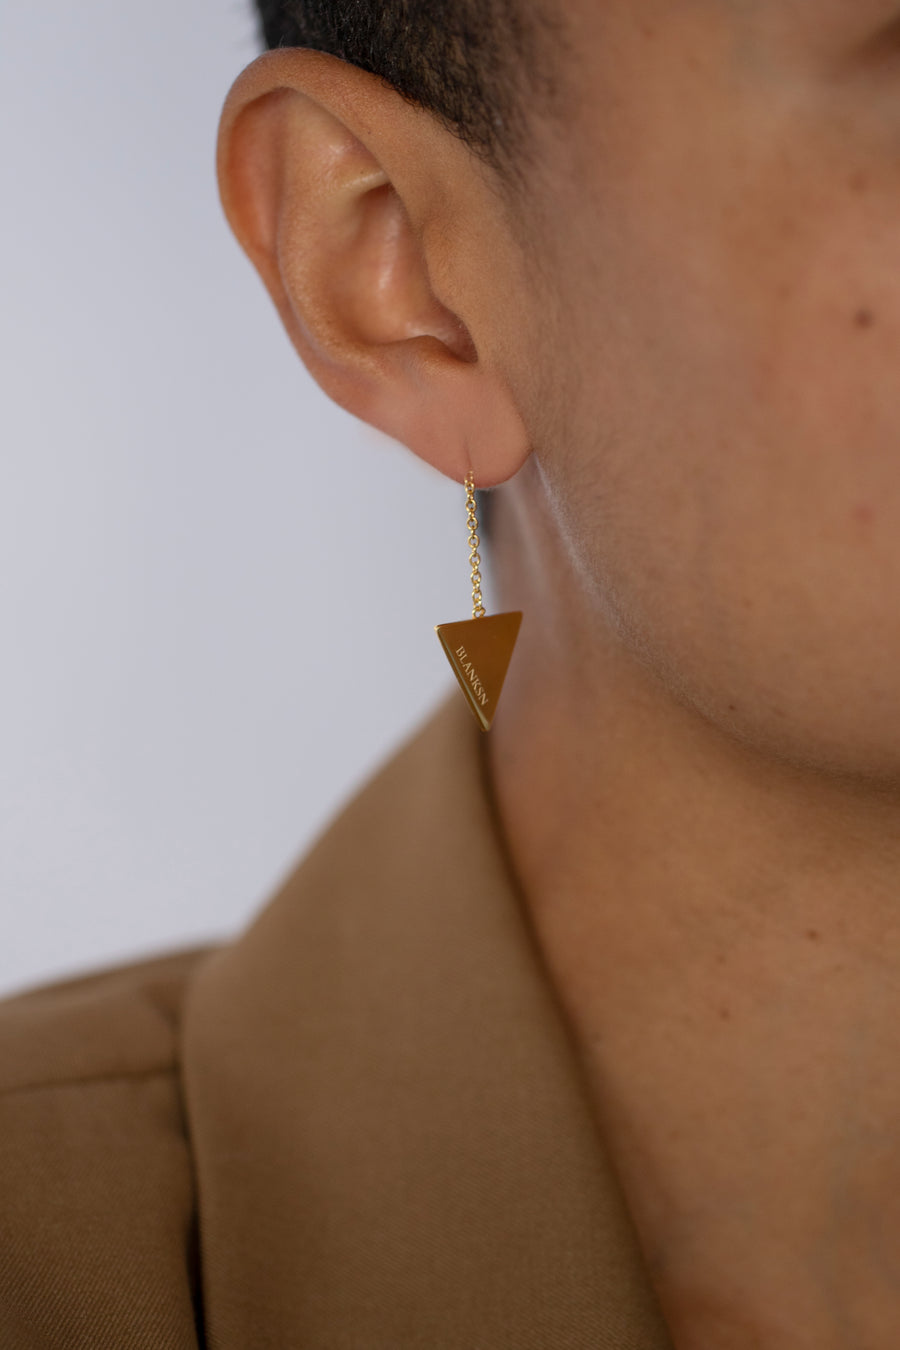 Woman wearing gold triangular empowering earrings